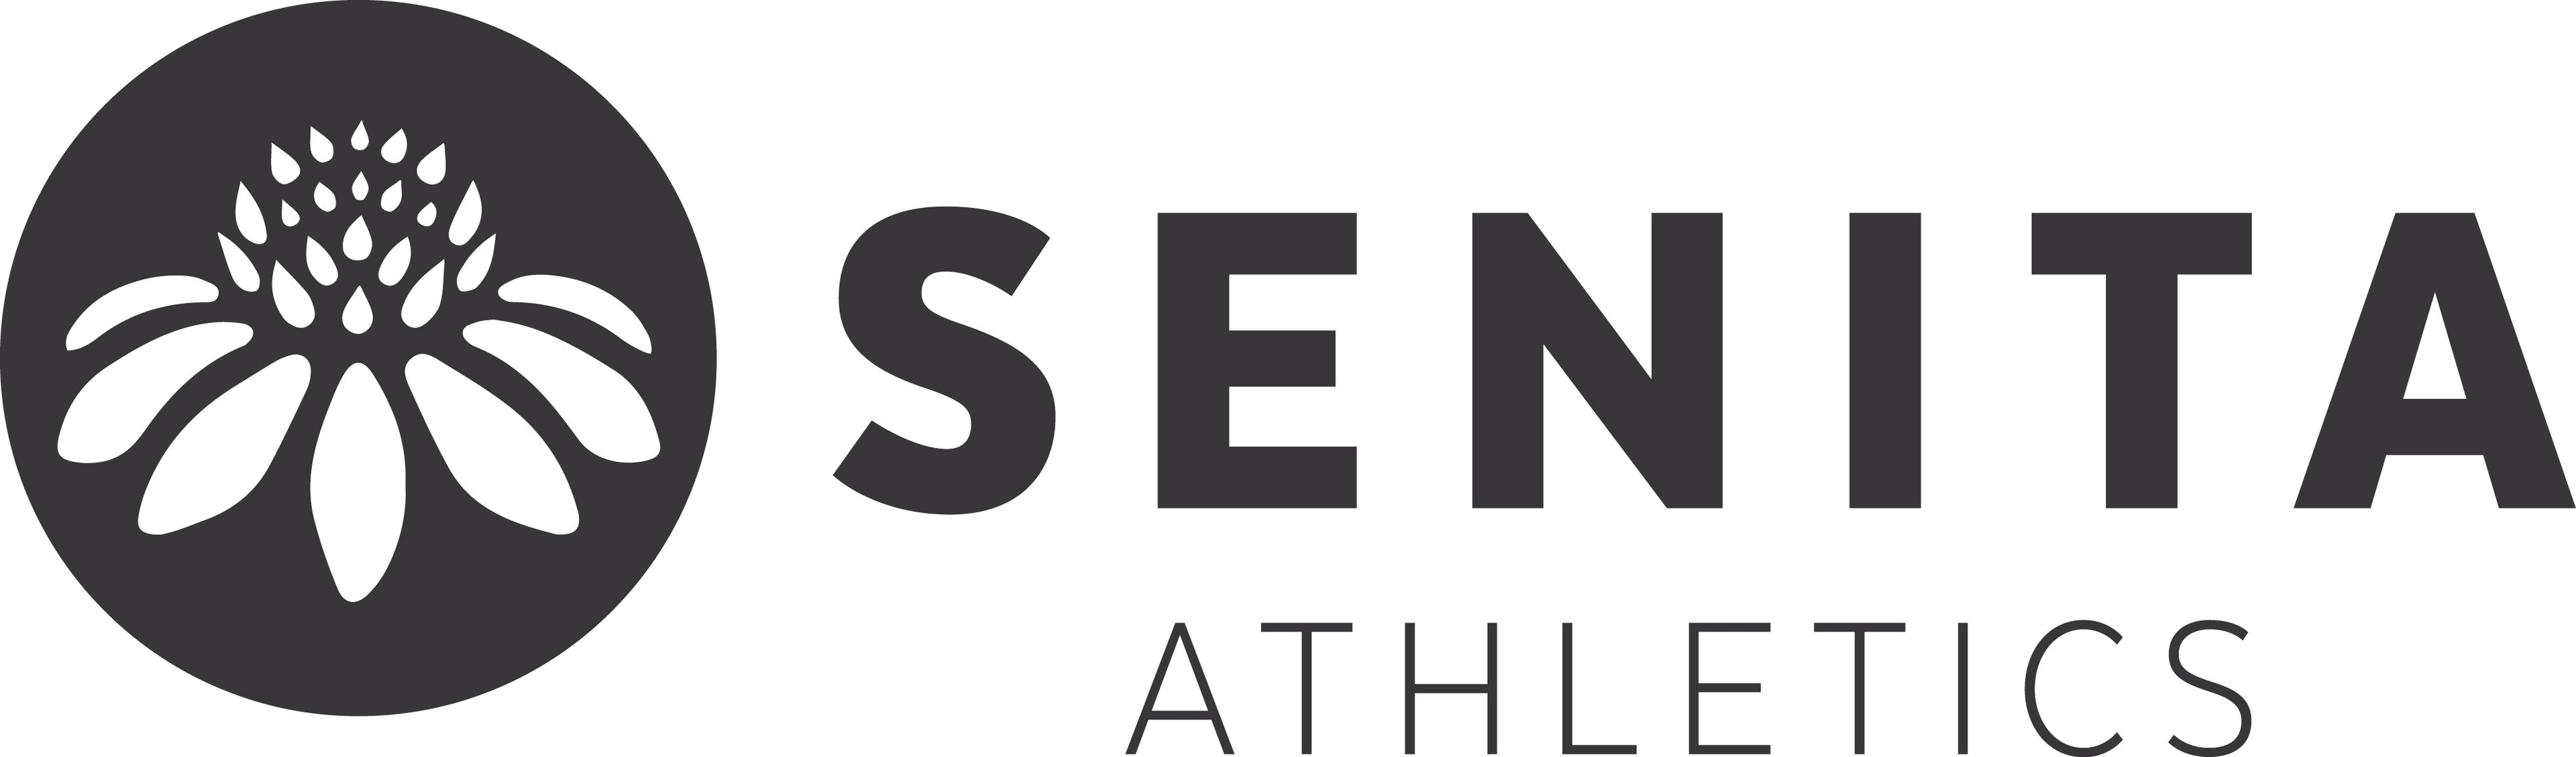 Senita Athletics logo